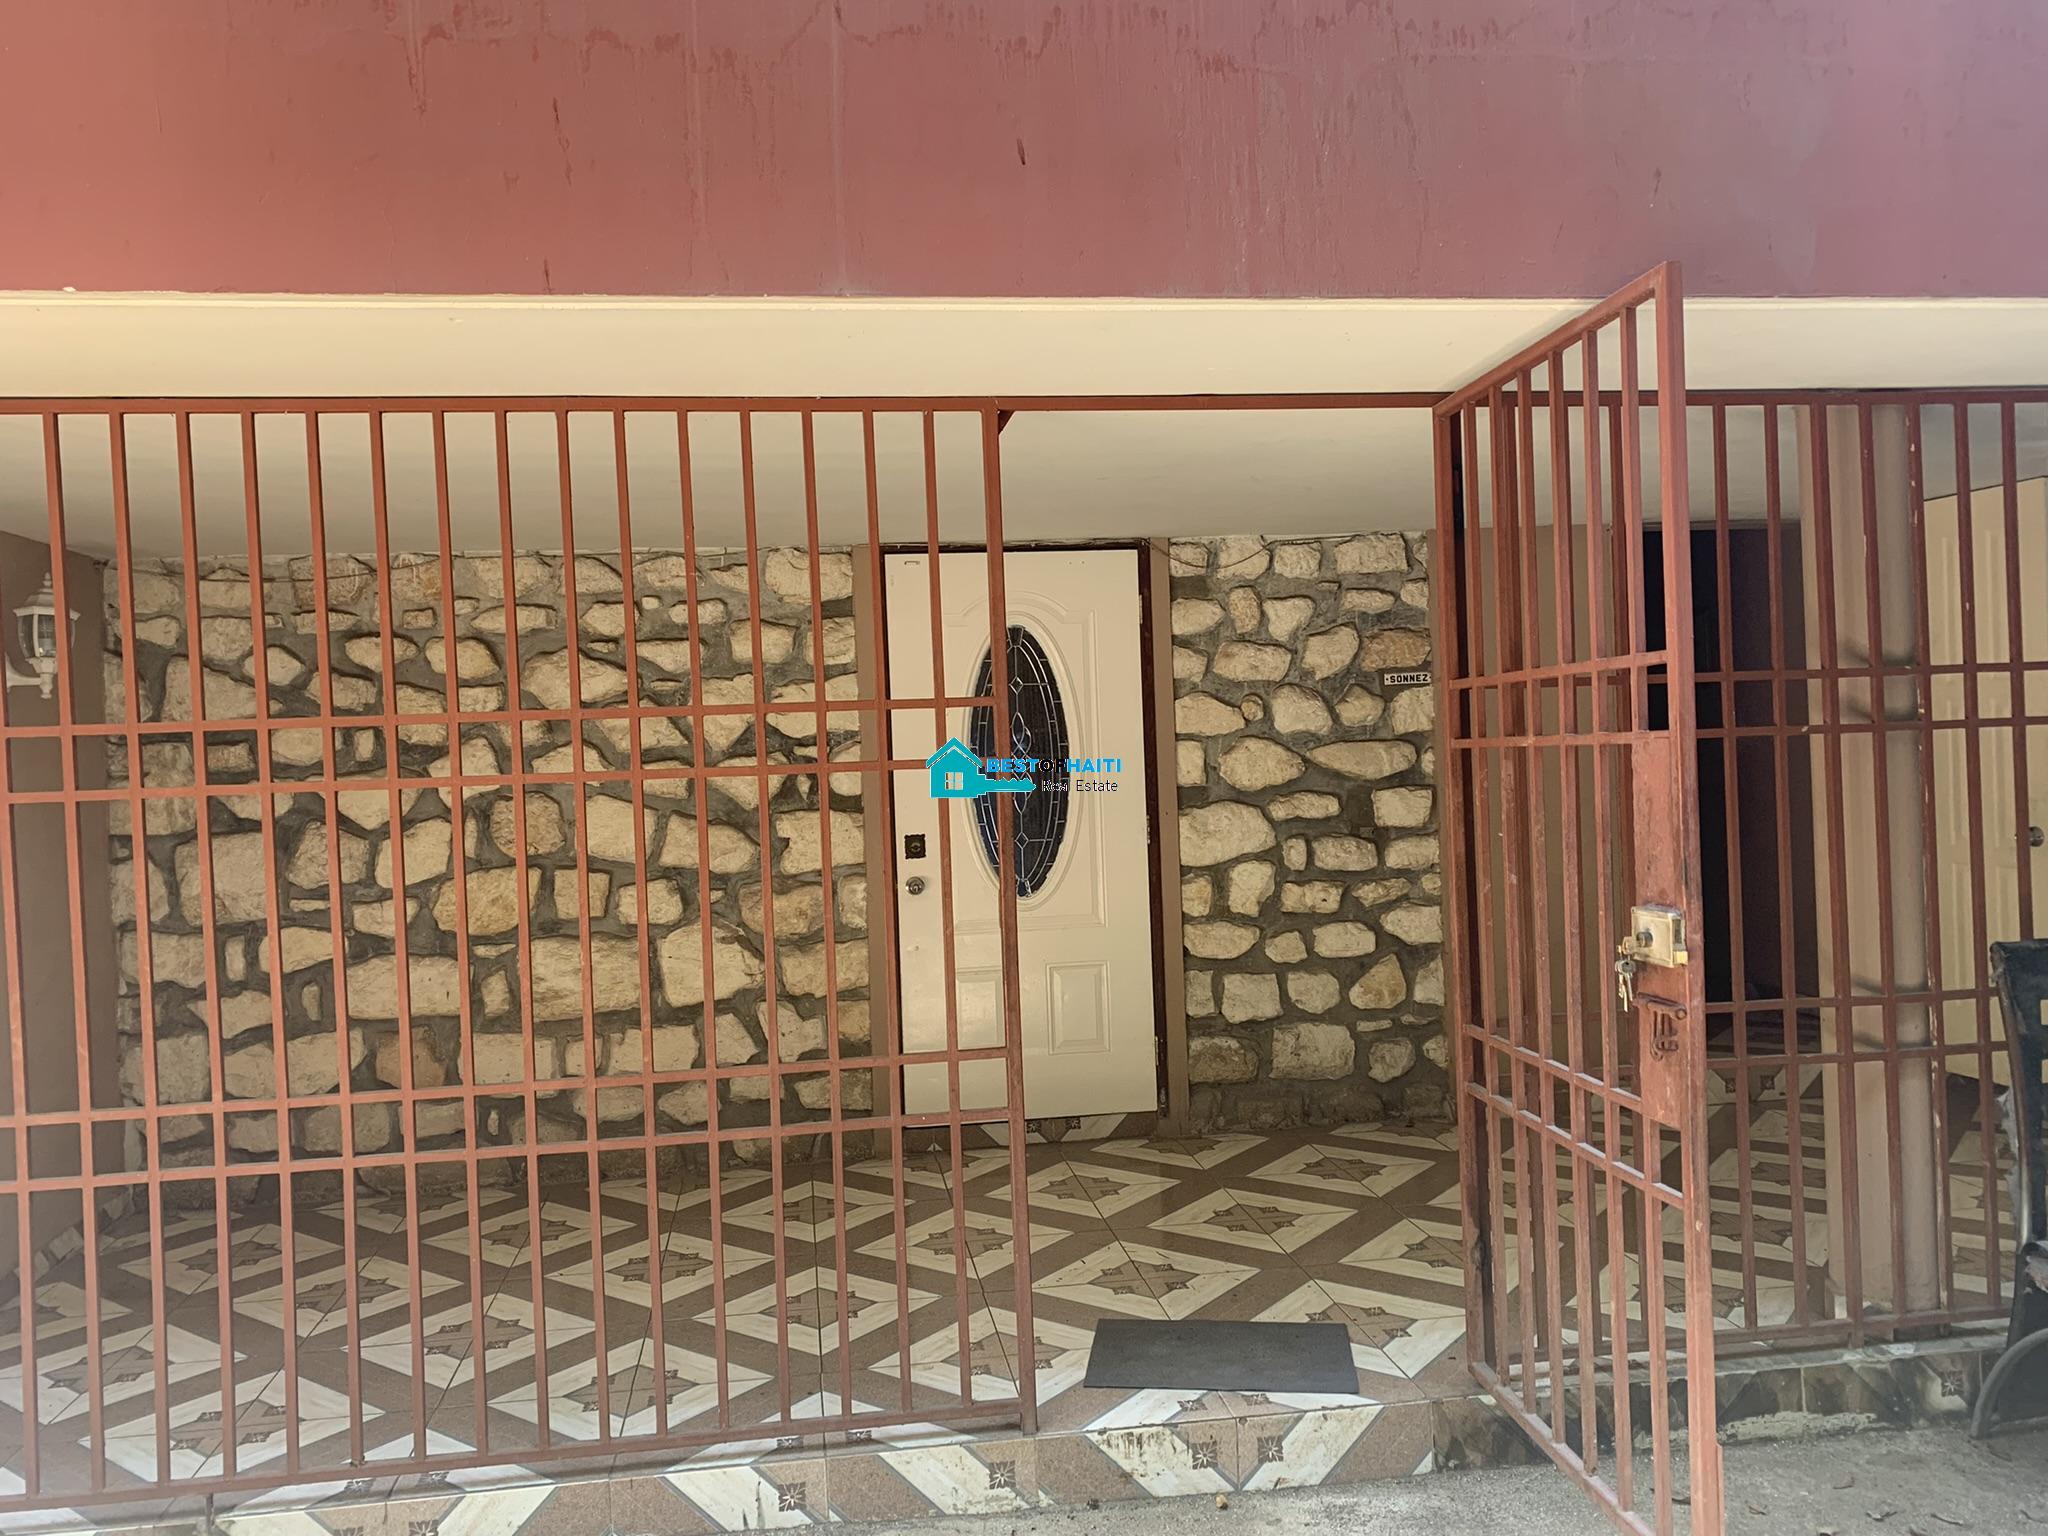 1 Bedroom, 1 Bath Apartment For Rent In Laboule 13, Petionville, Haiti